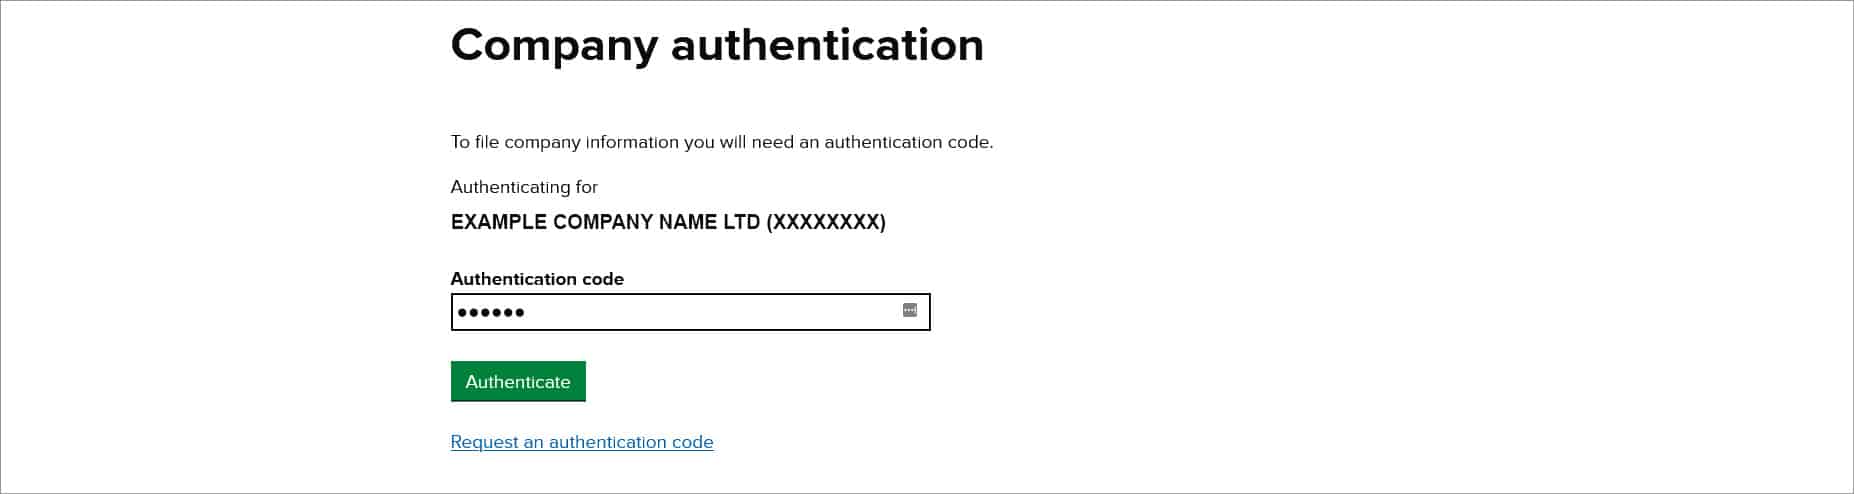 Company authentication